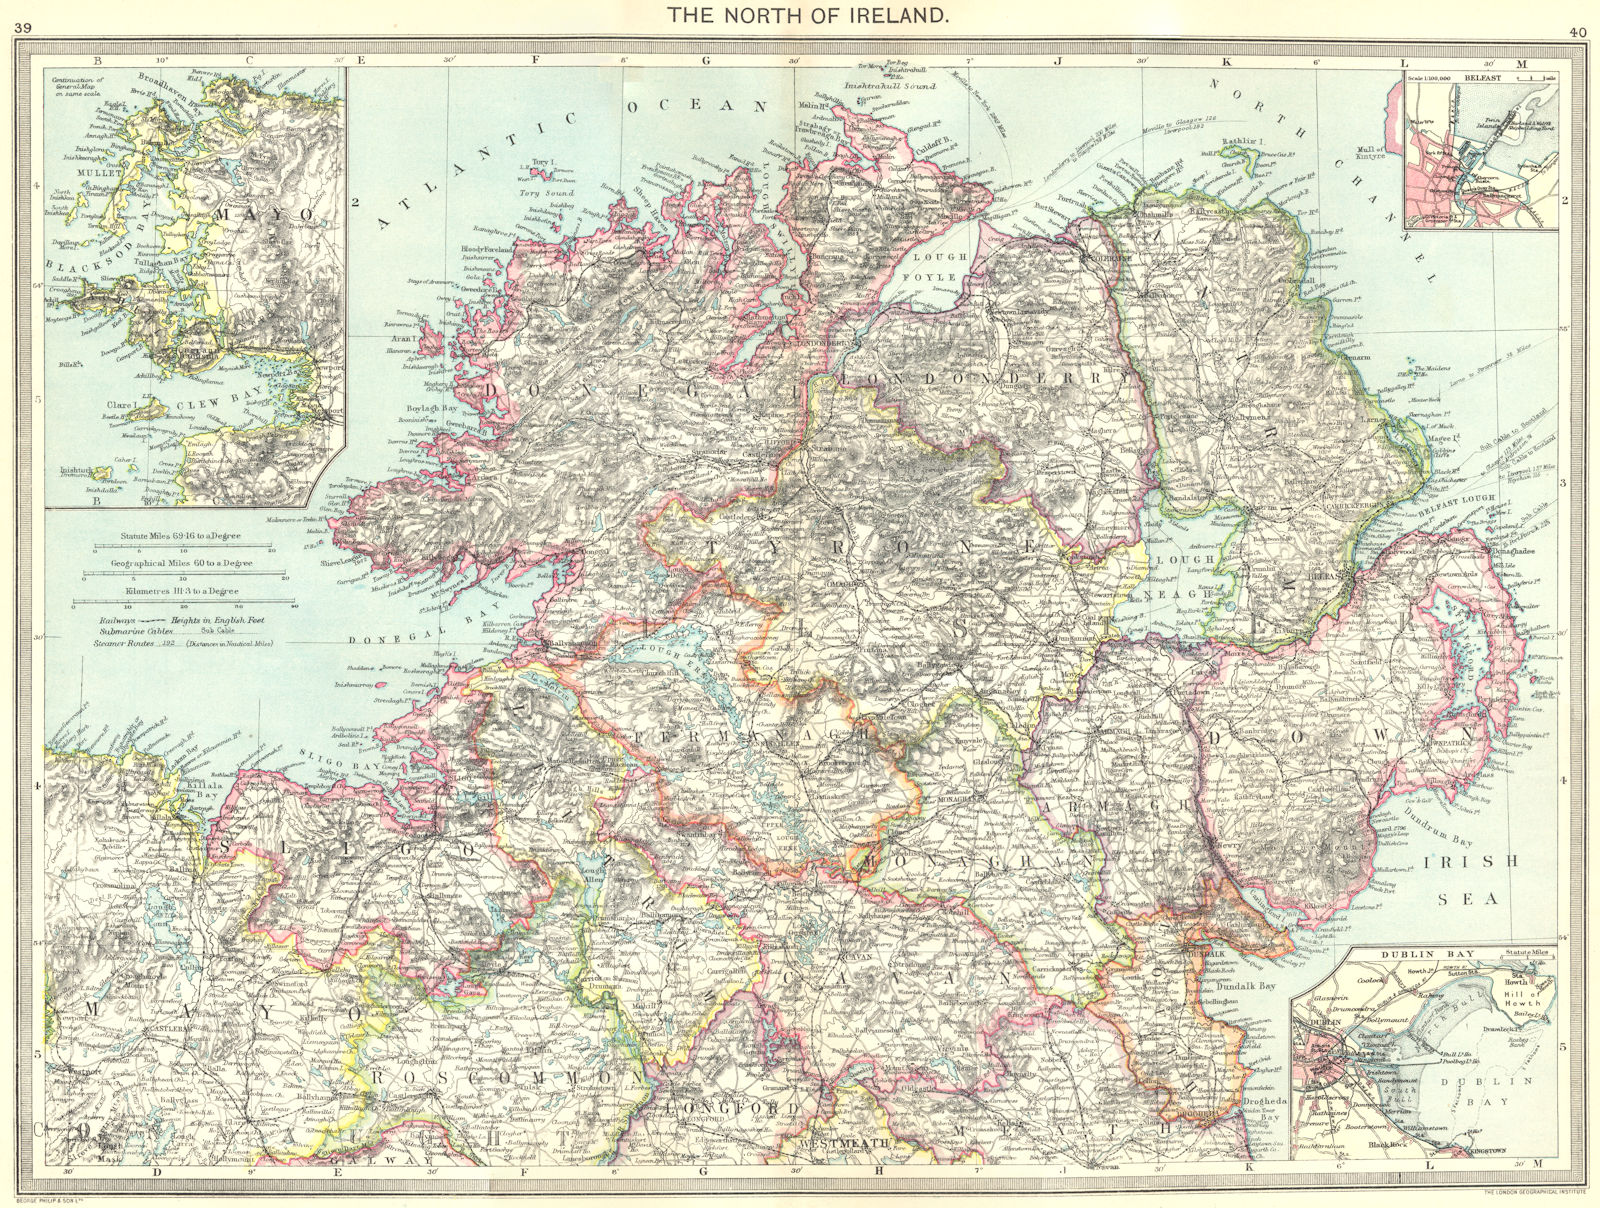 IRELAND. North of; maps Belfast; Mayo; Dublin Bay 1907 old antique chart